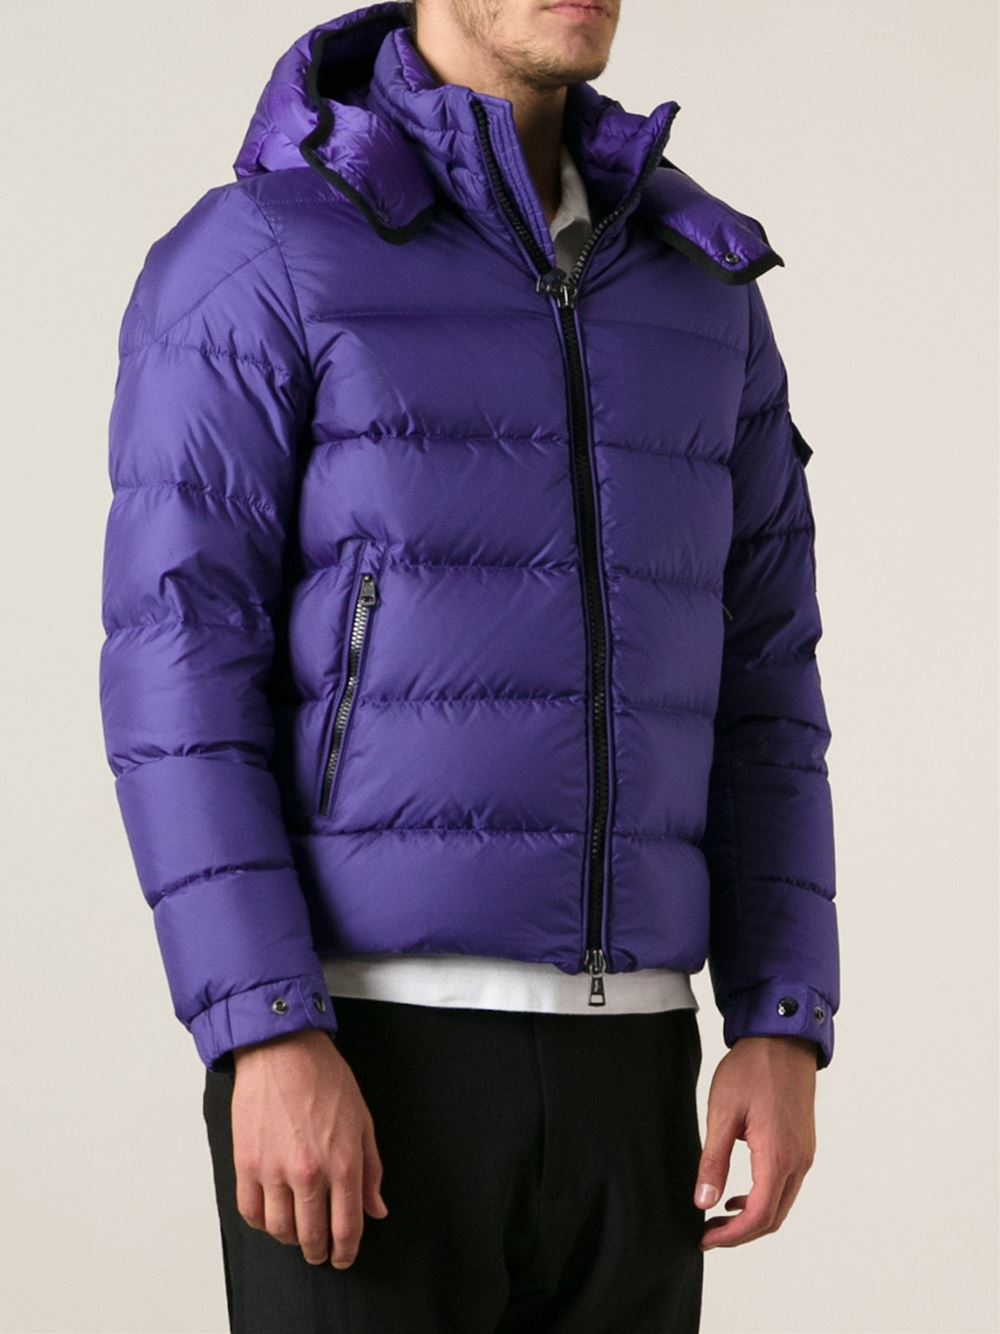 Lyst - Moncler 'Maya' Padded Jacket in Purple for Men